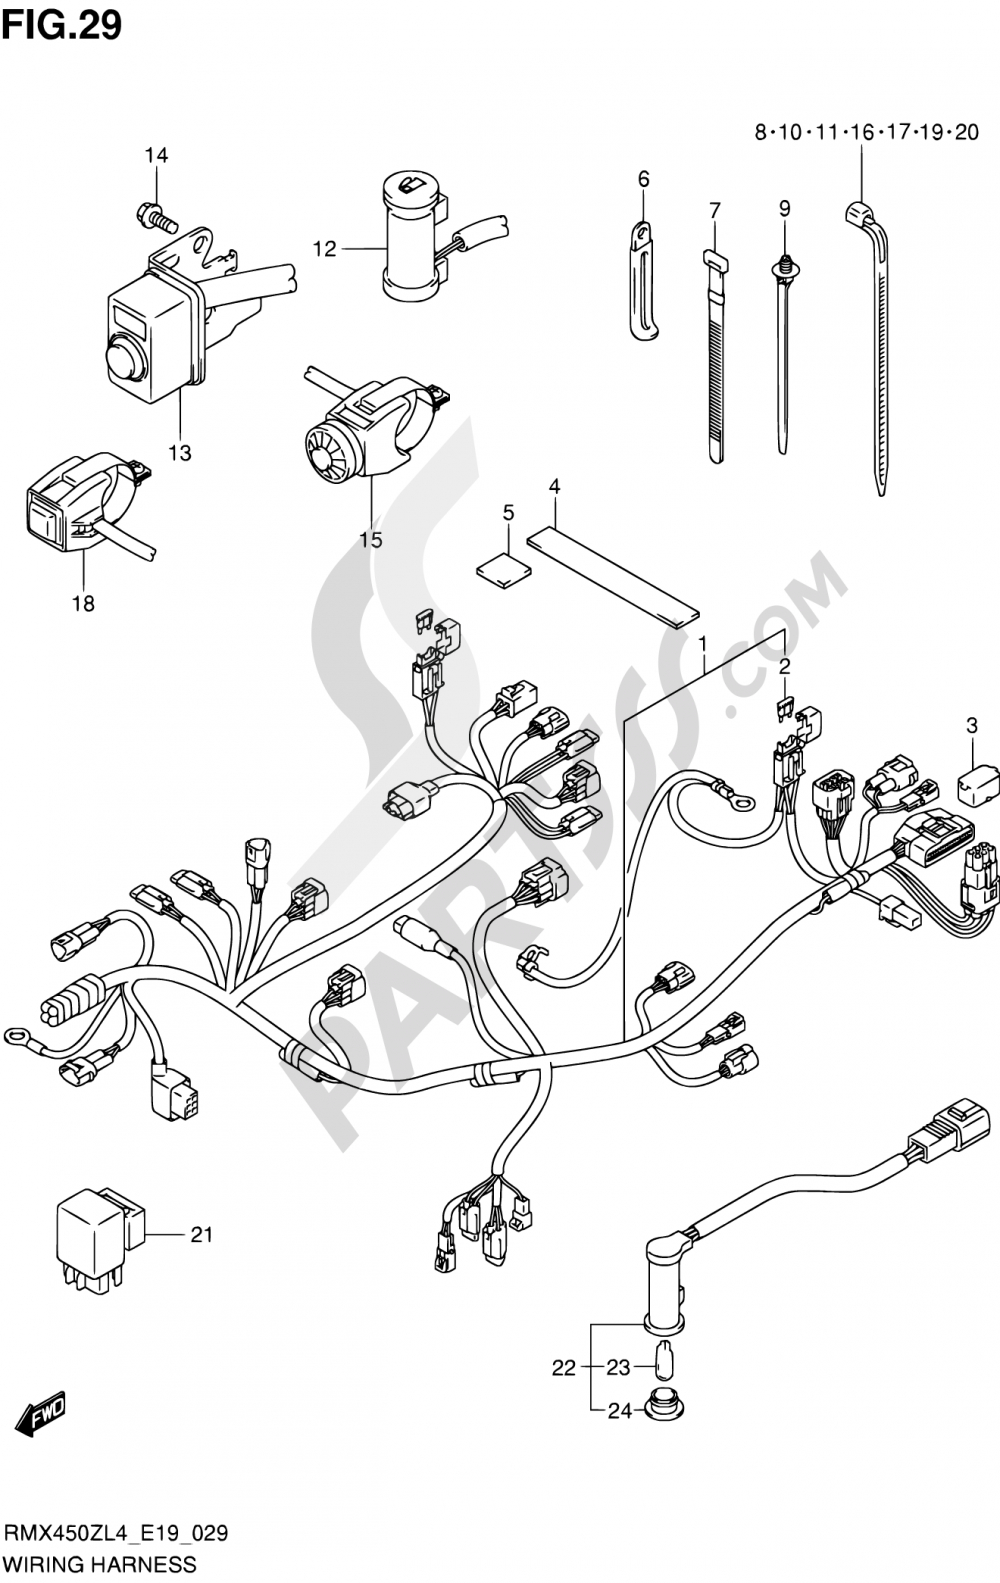 Suzuki Rmx450Z Wiring Diagram | Manual E-Books - Kubota B7800 Wiring Diagram